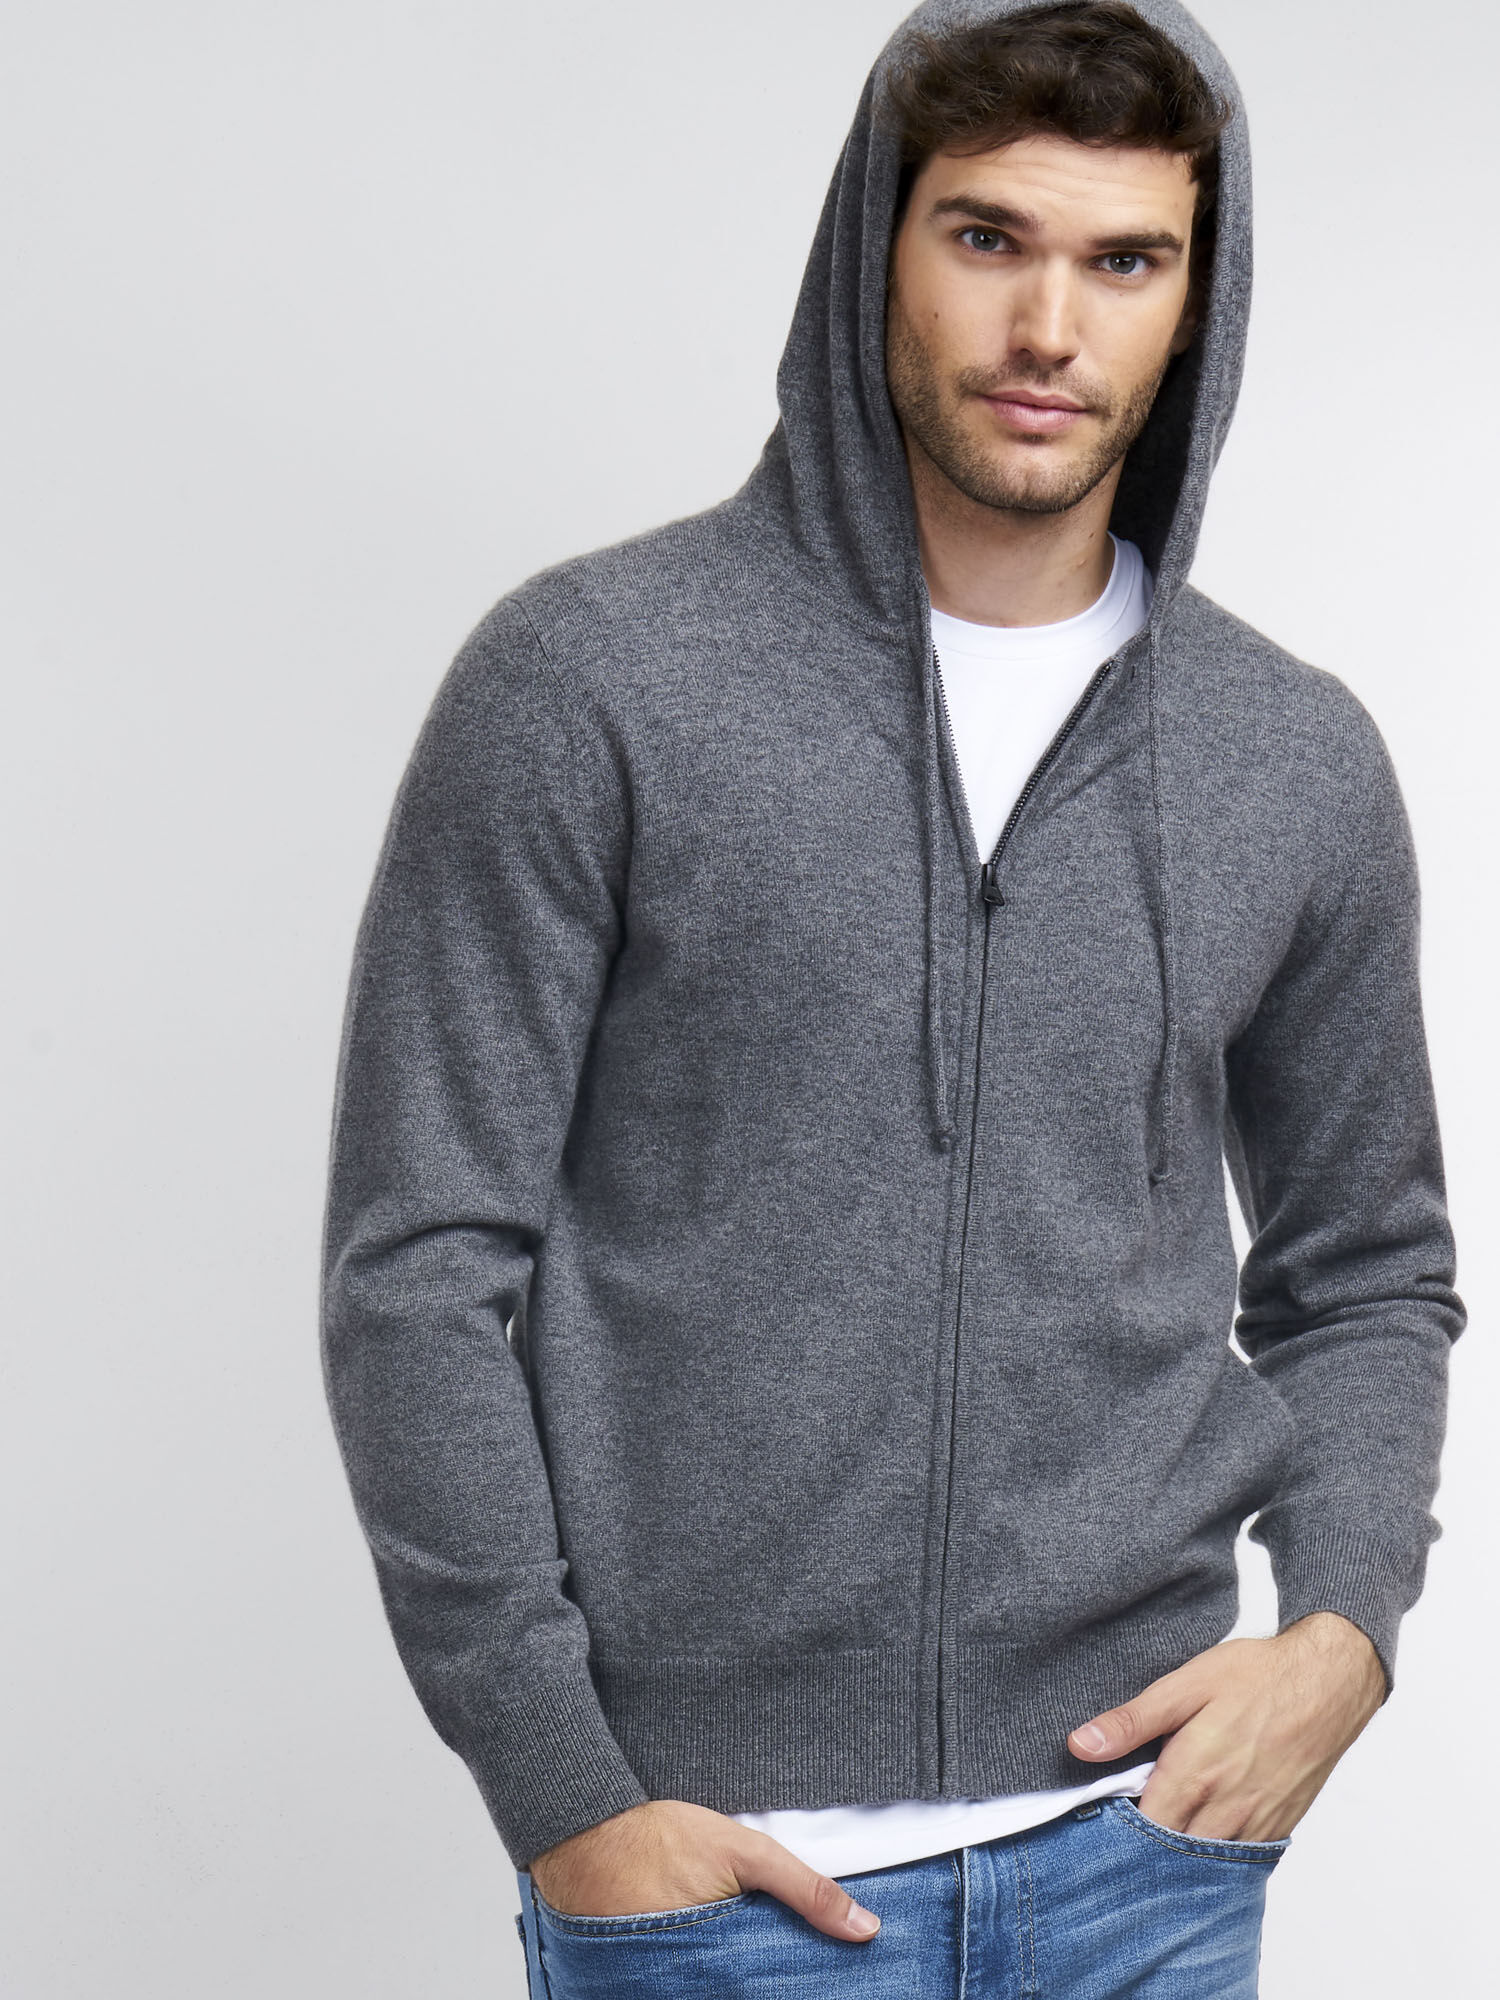 Men's cashmere hoodie